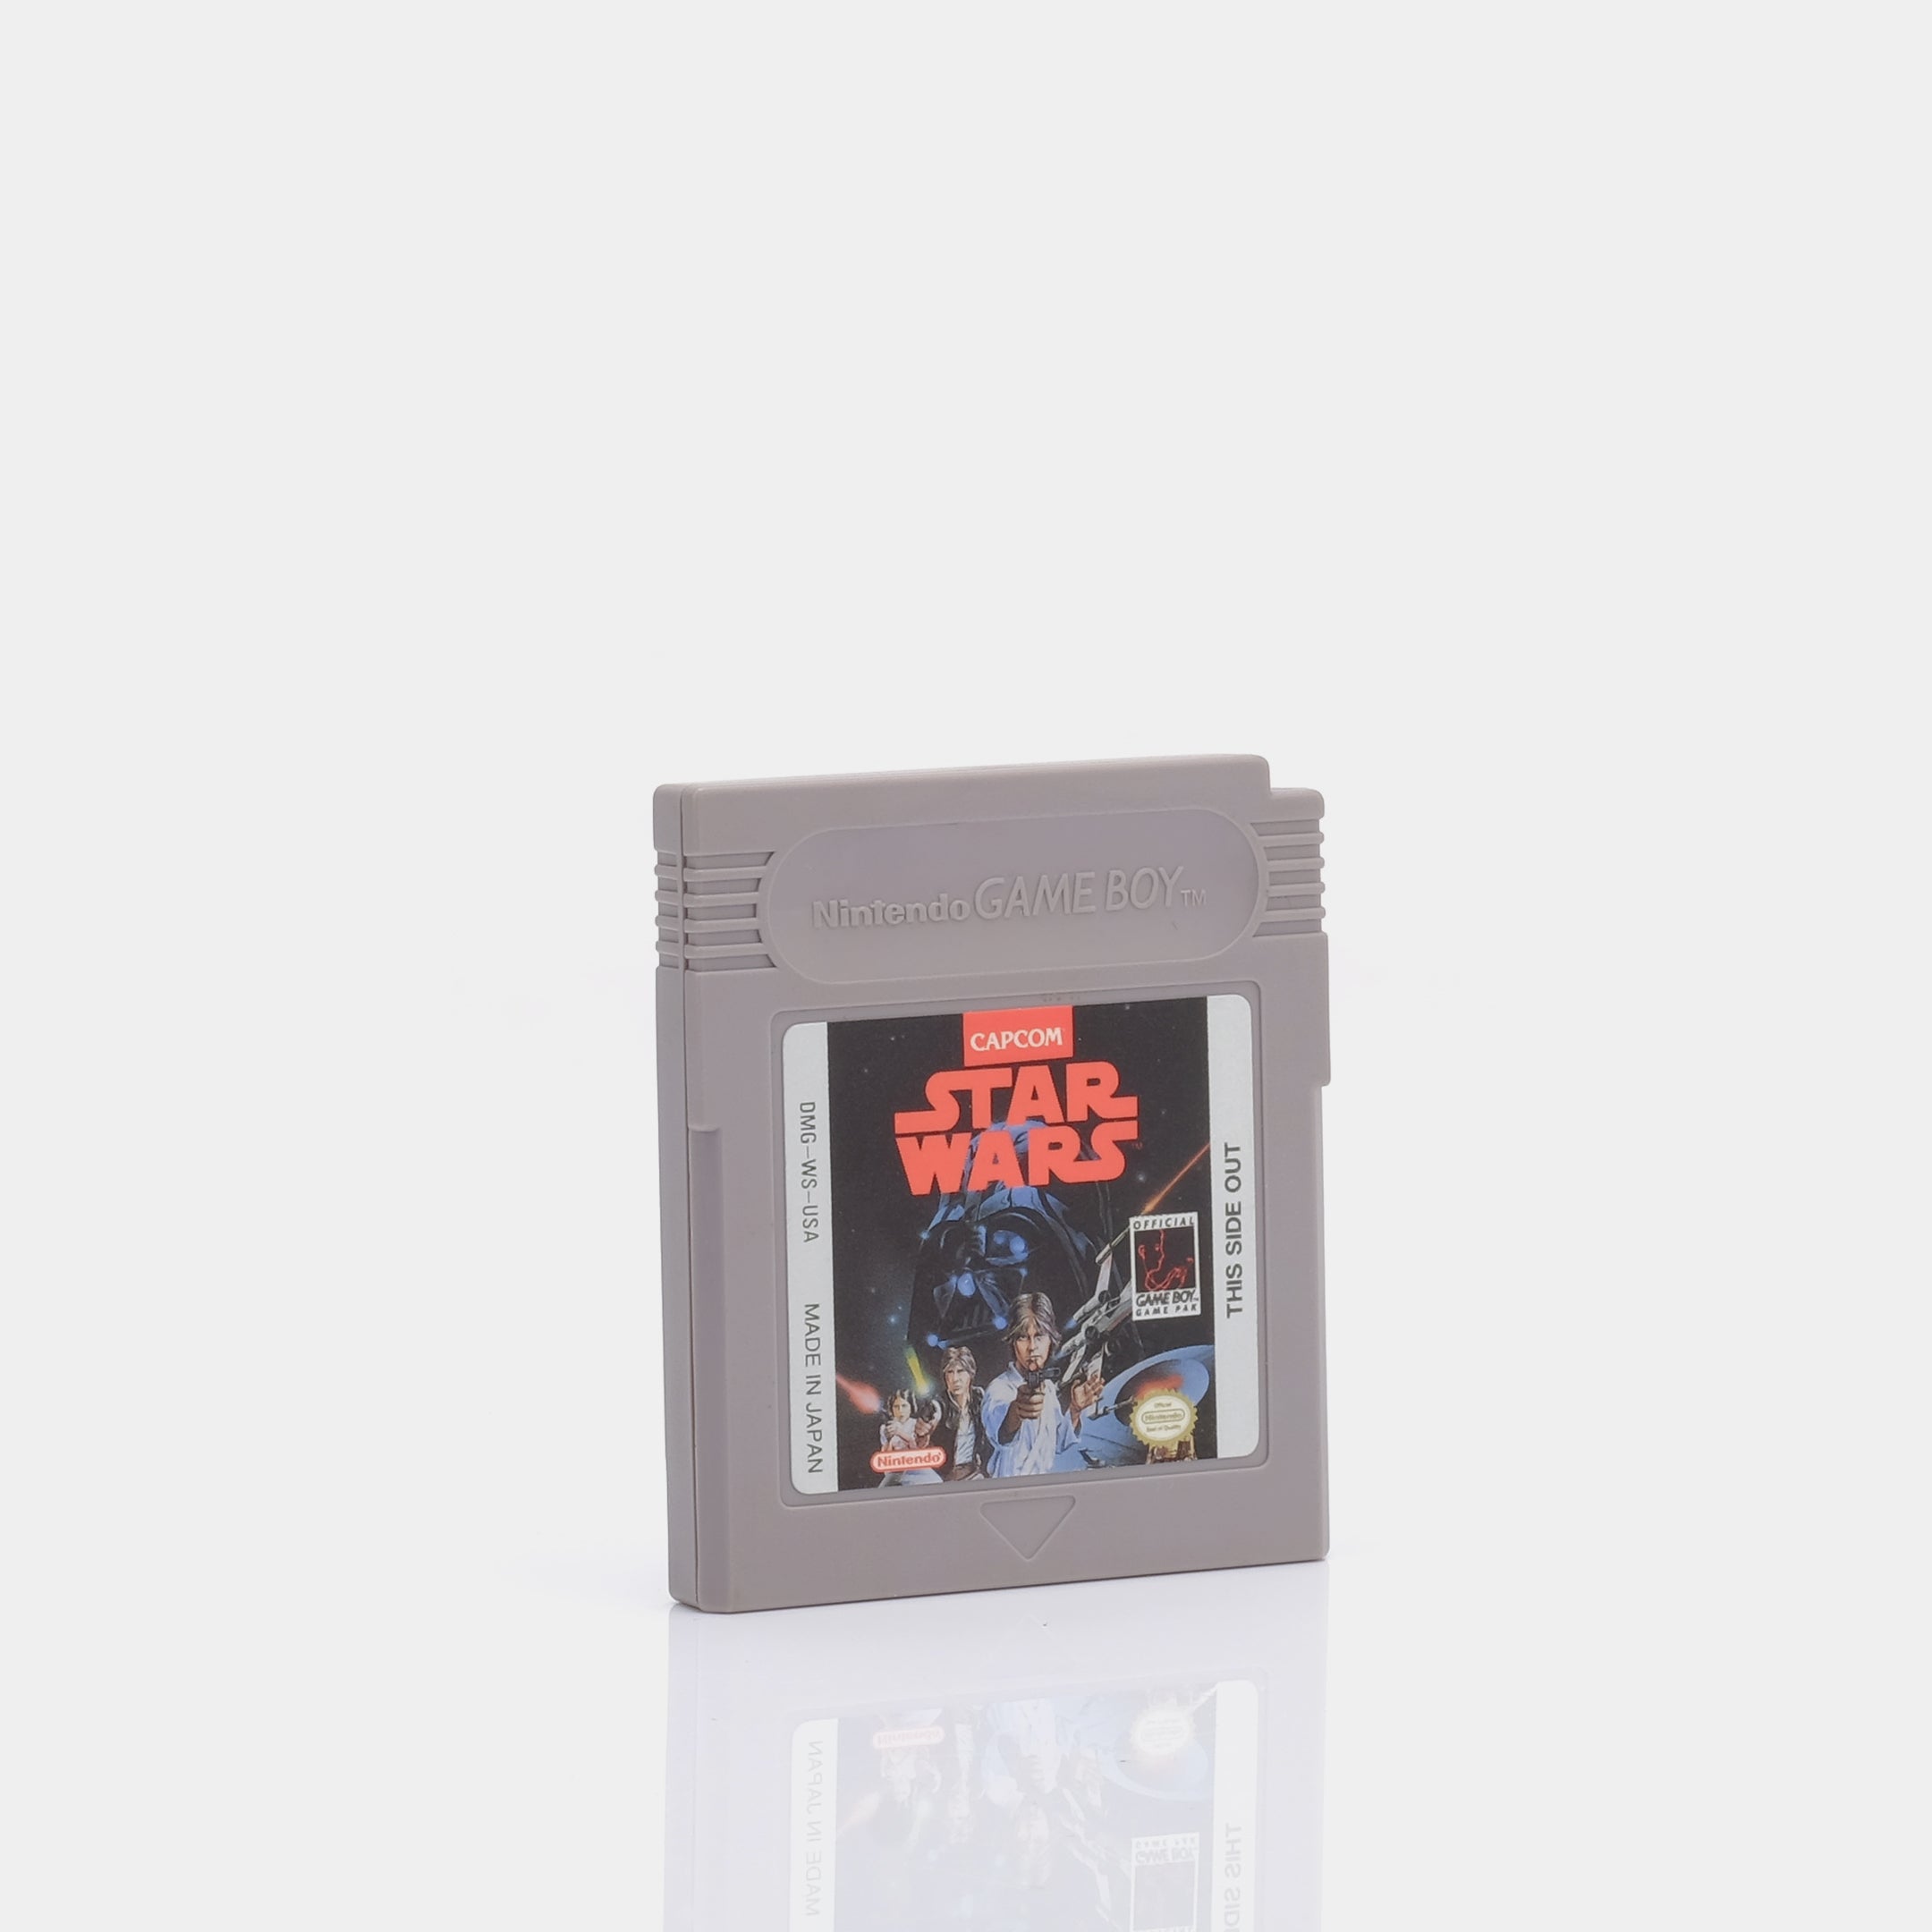 Capcom Star Wars Game Boy Game